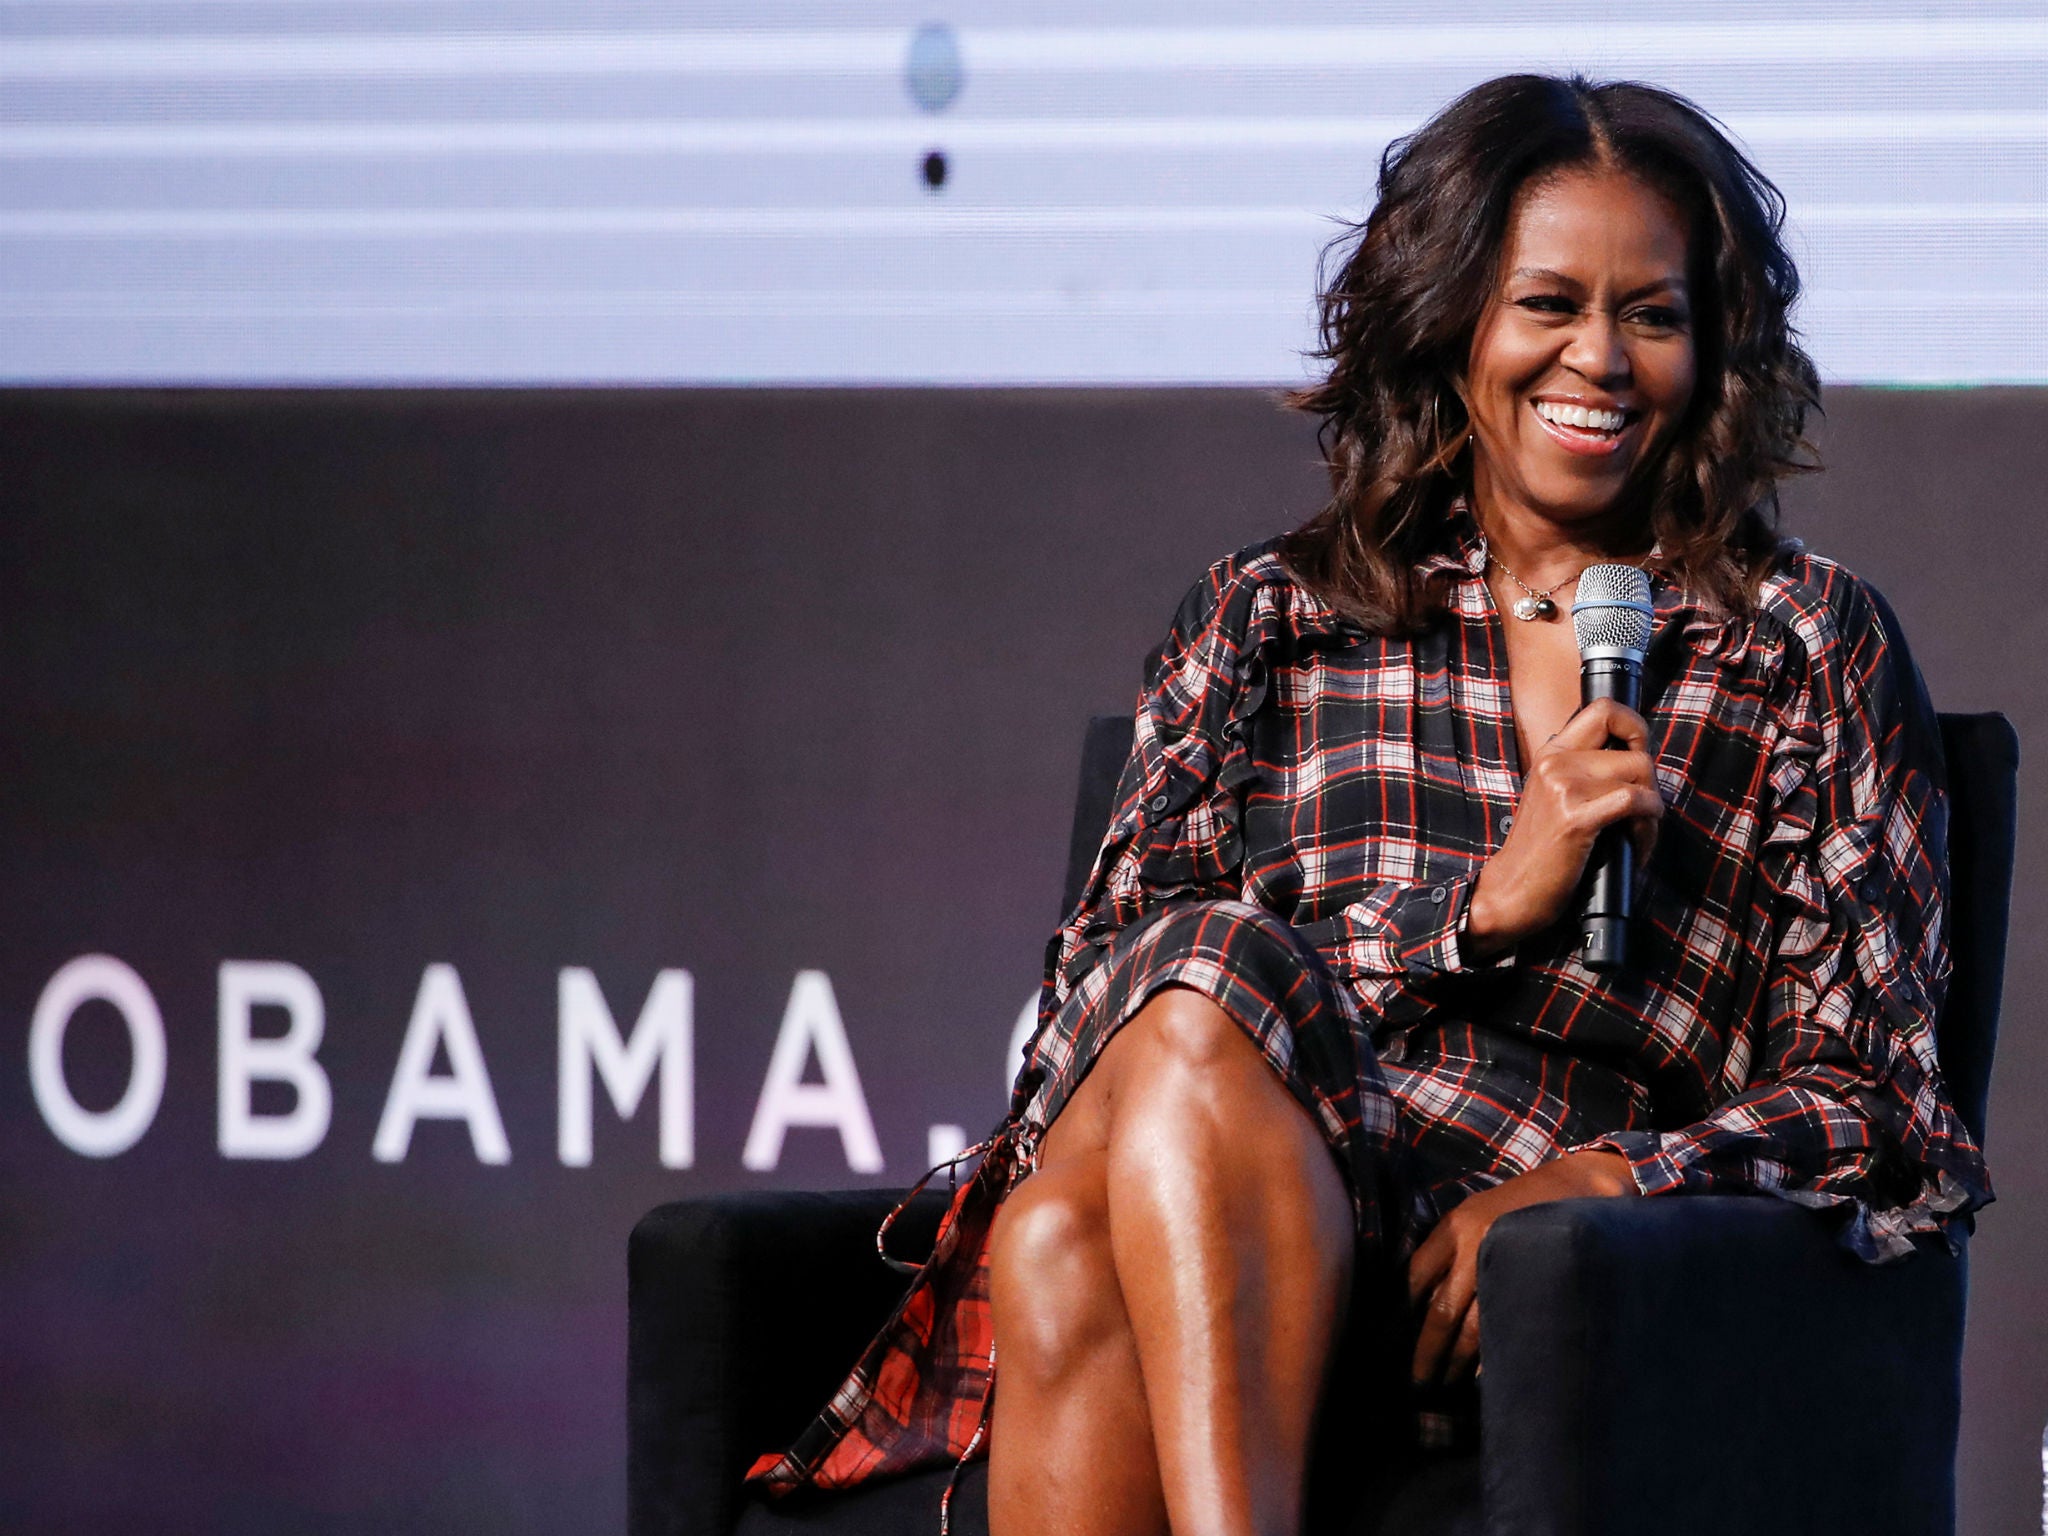 Michelle Obama's memoir will be released in November